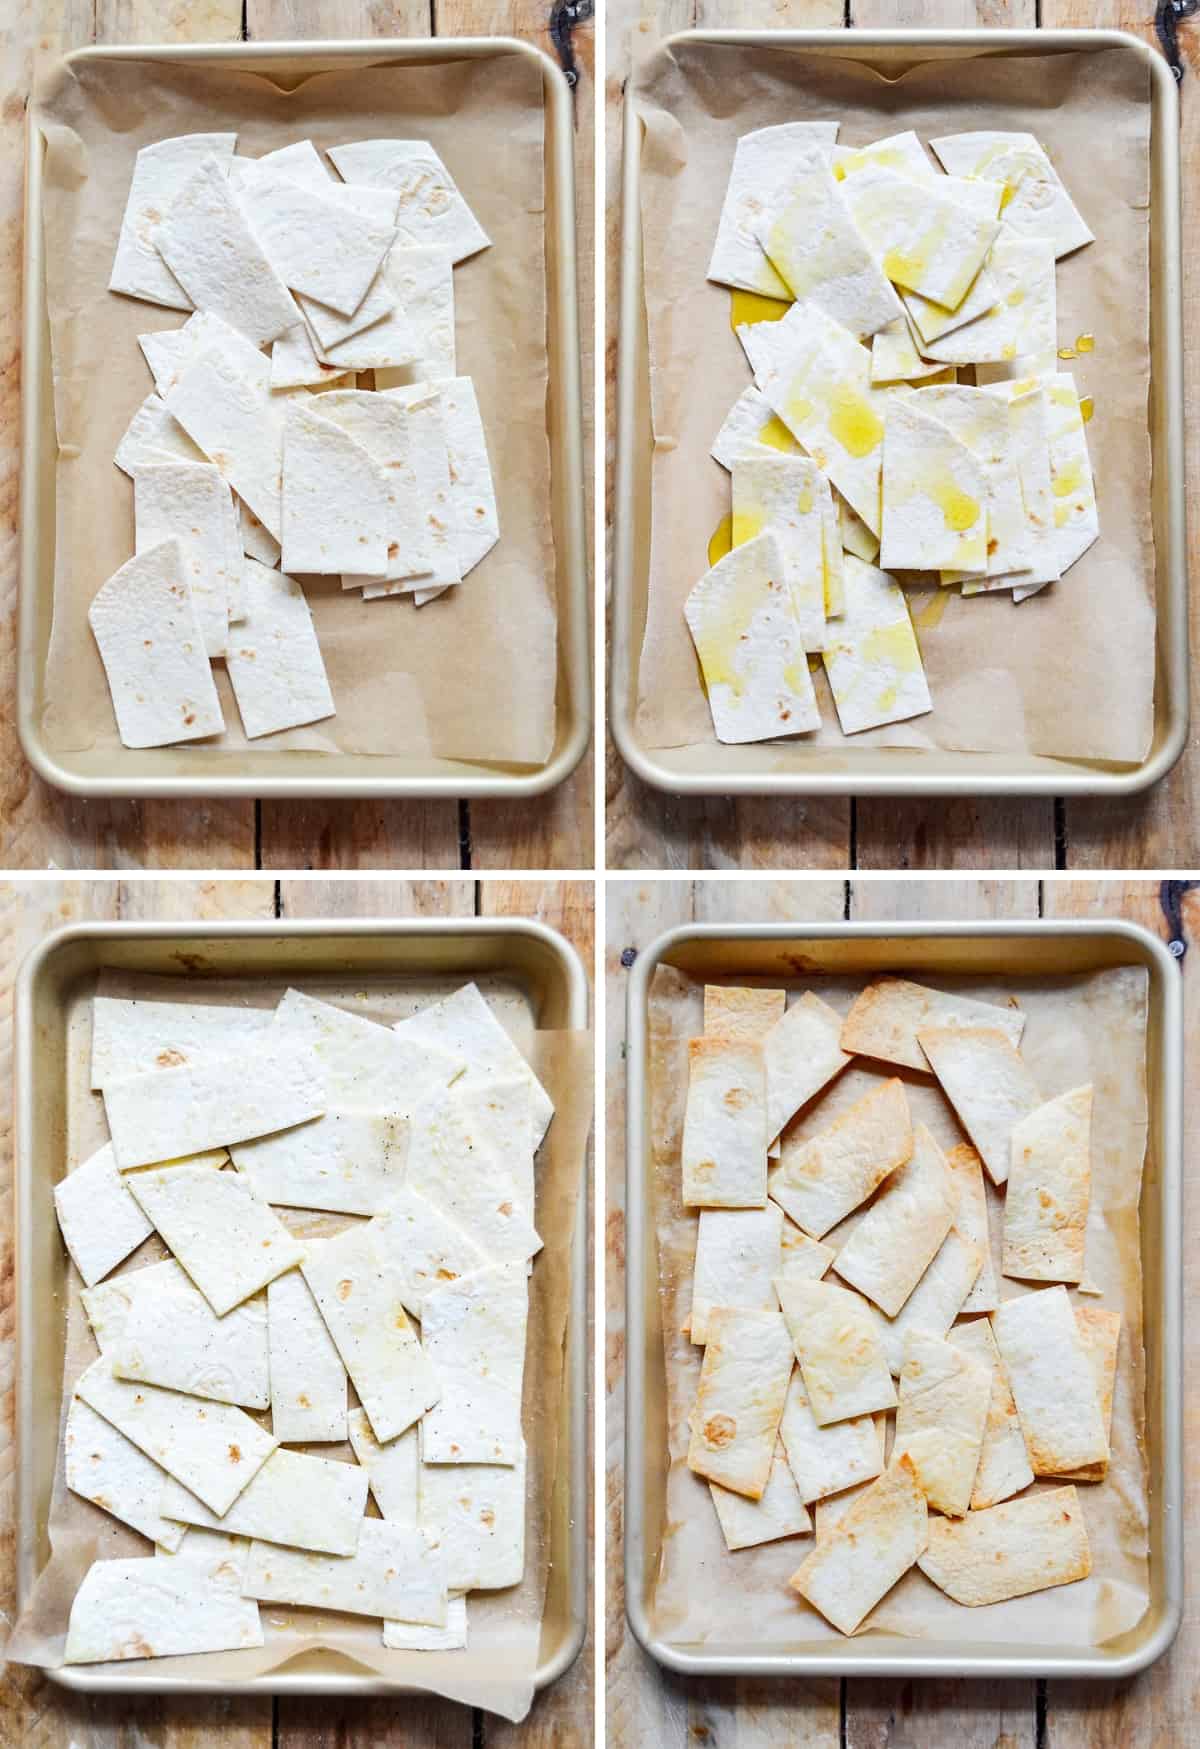 The flour tortilla strips baking in a sheet pan.